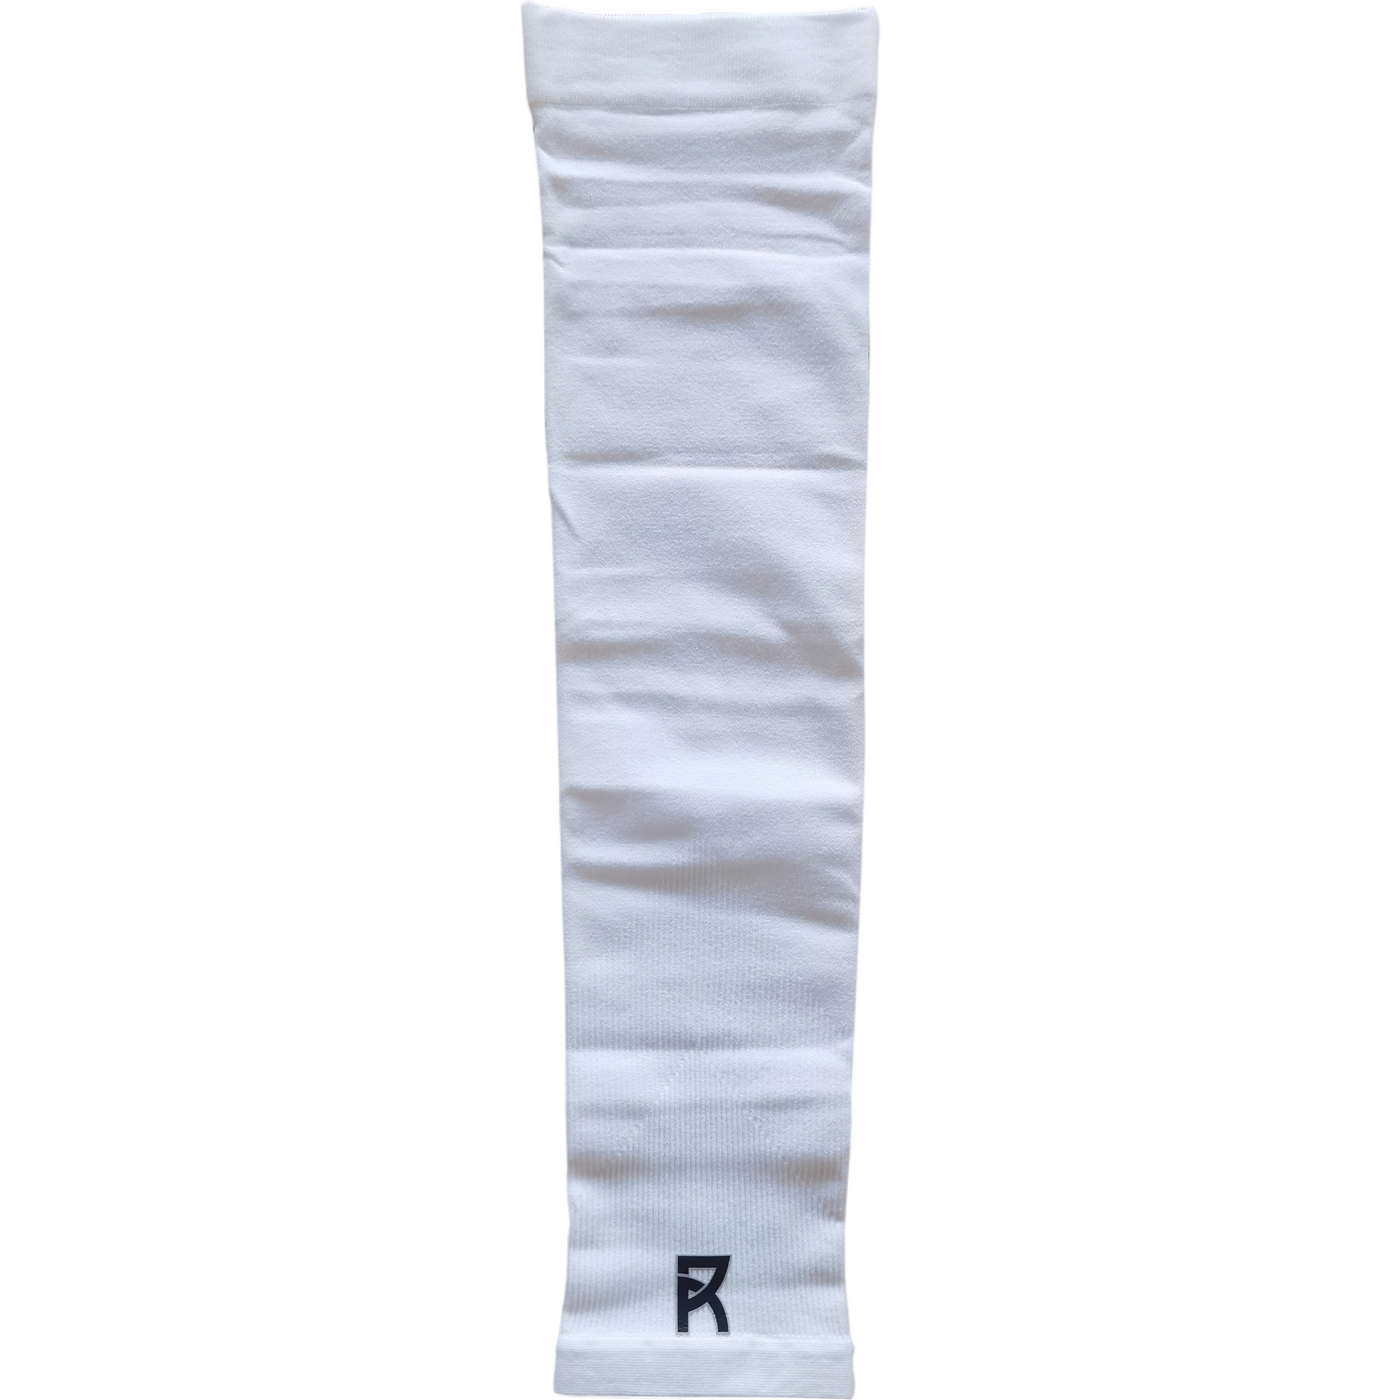 Reyrr Compression Arm Sleeves 2-pack - Premium Sleeve from Reyrr Athletics - Shop now at Reyrr Athletics